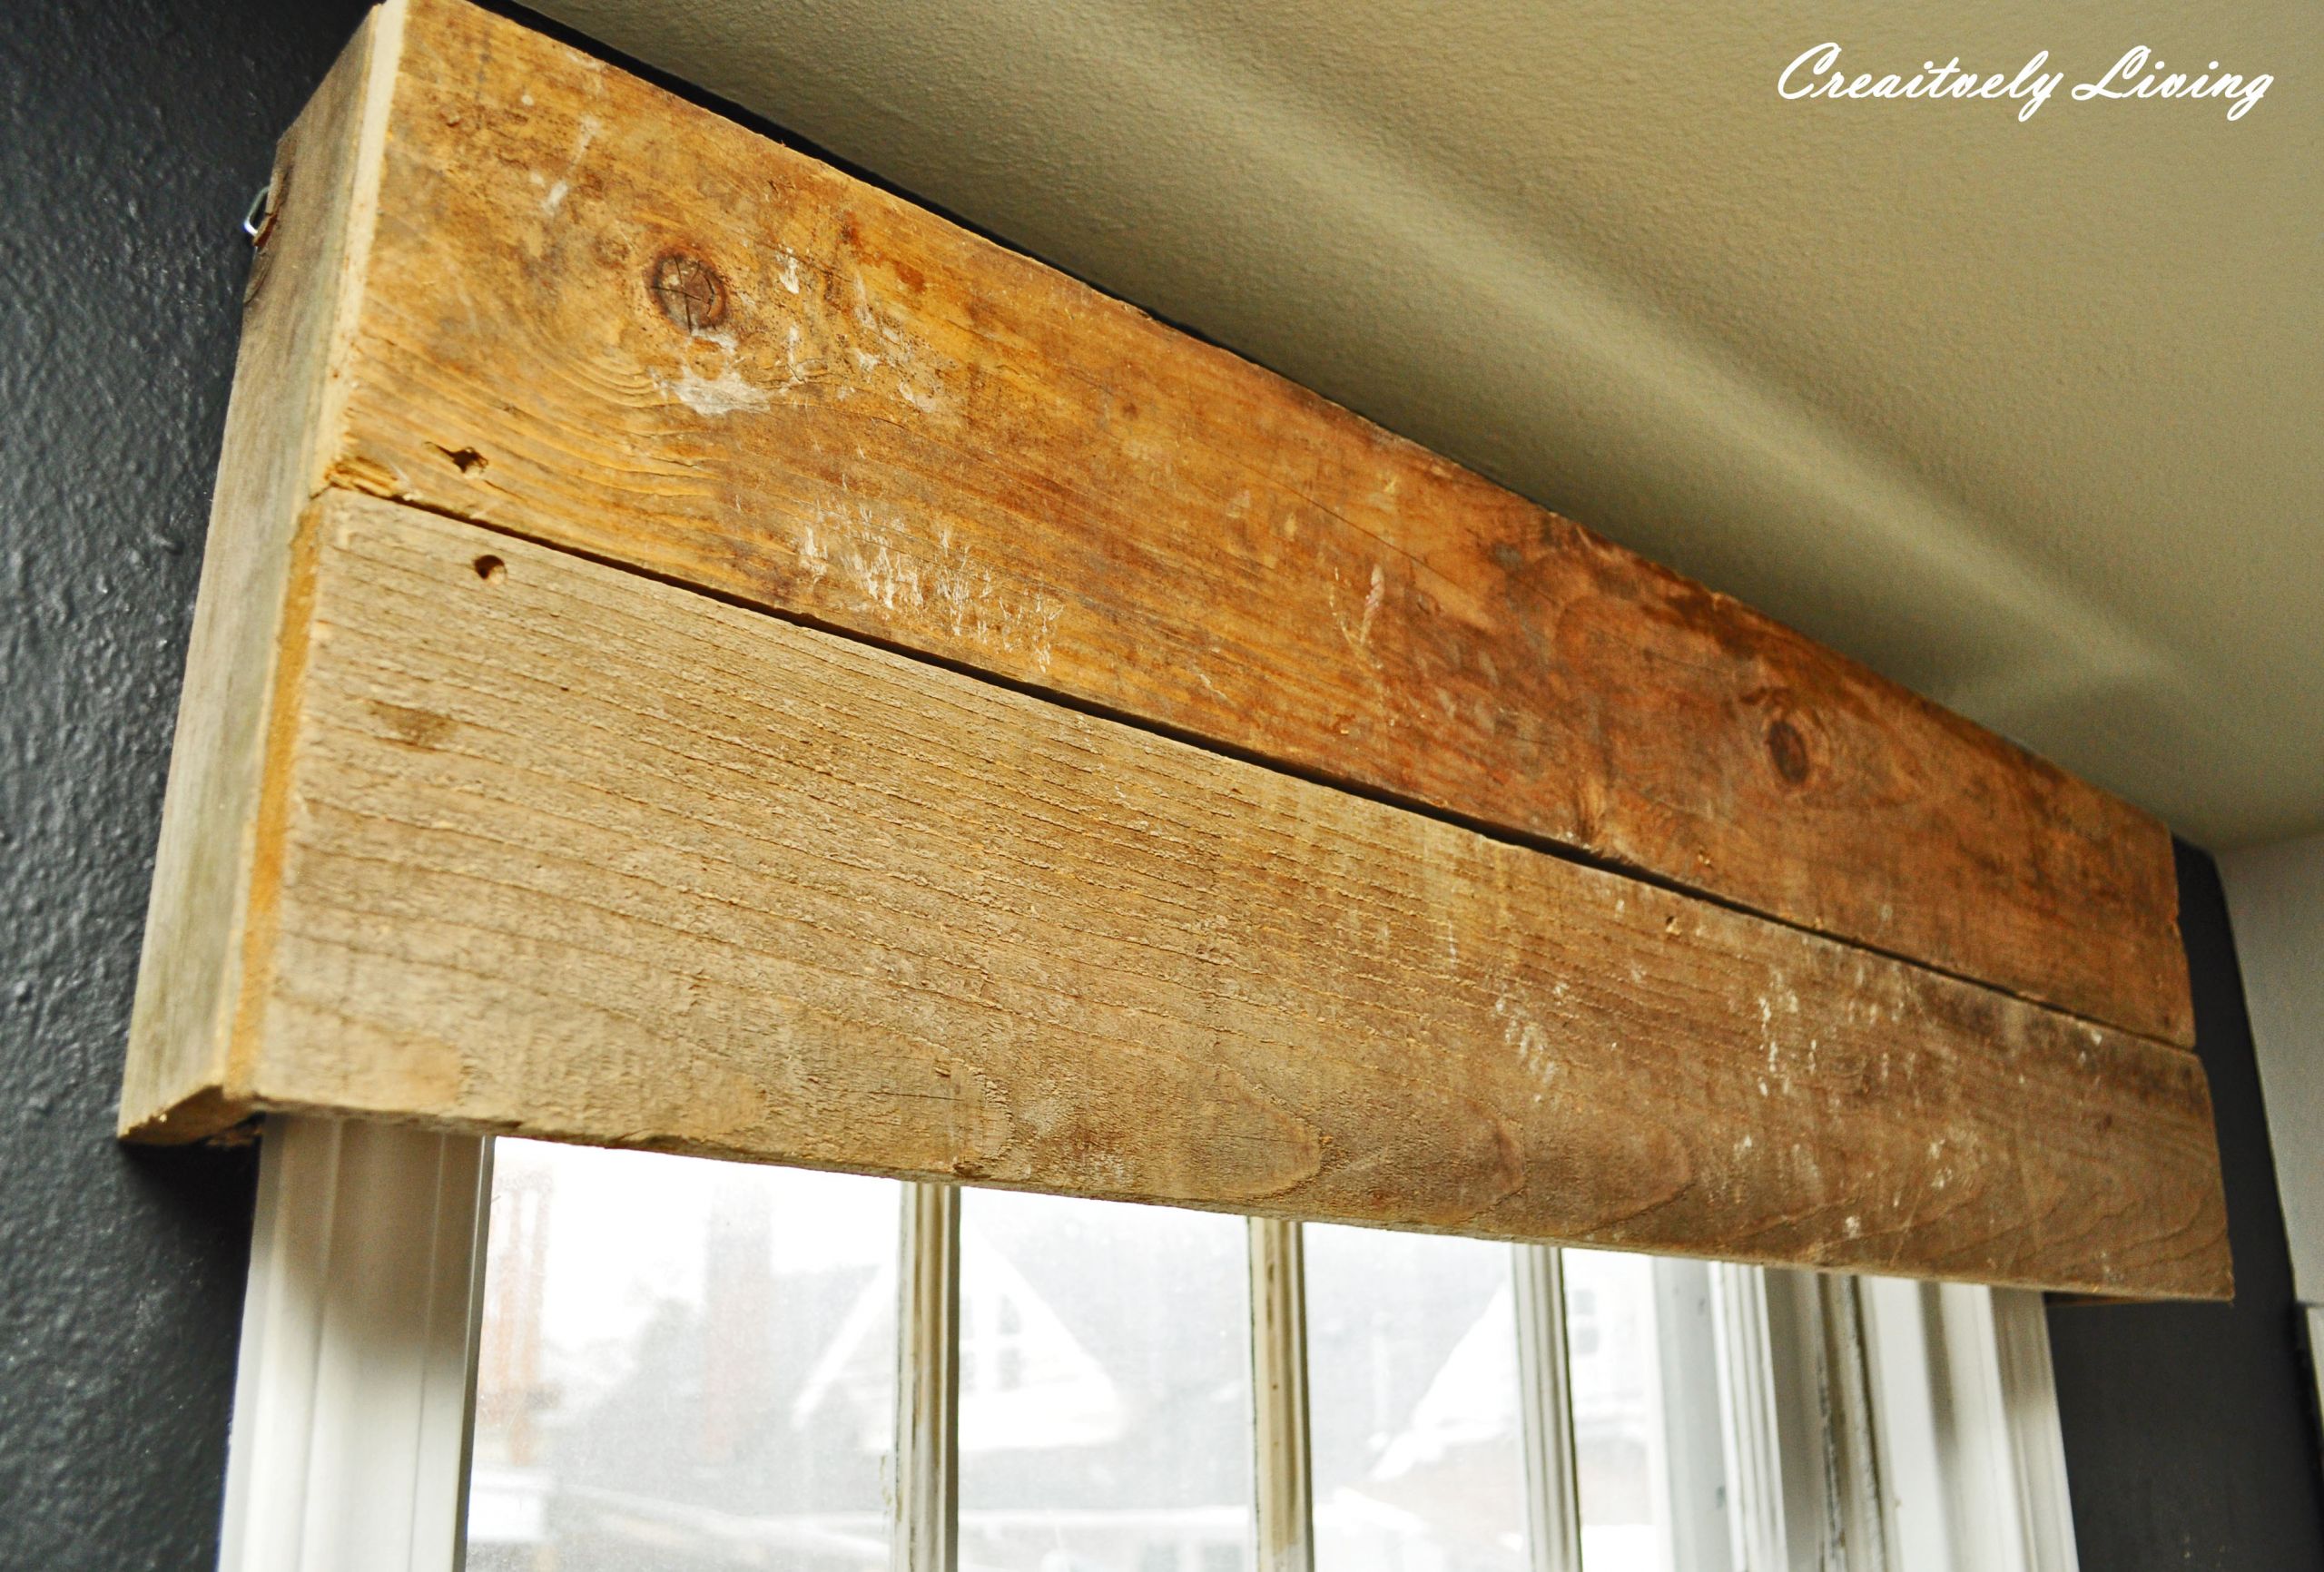 DIY Wood Window Valance
 DIY Rustic Window Valances by Creatively Living Blog